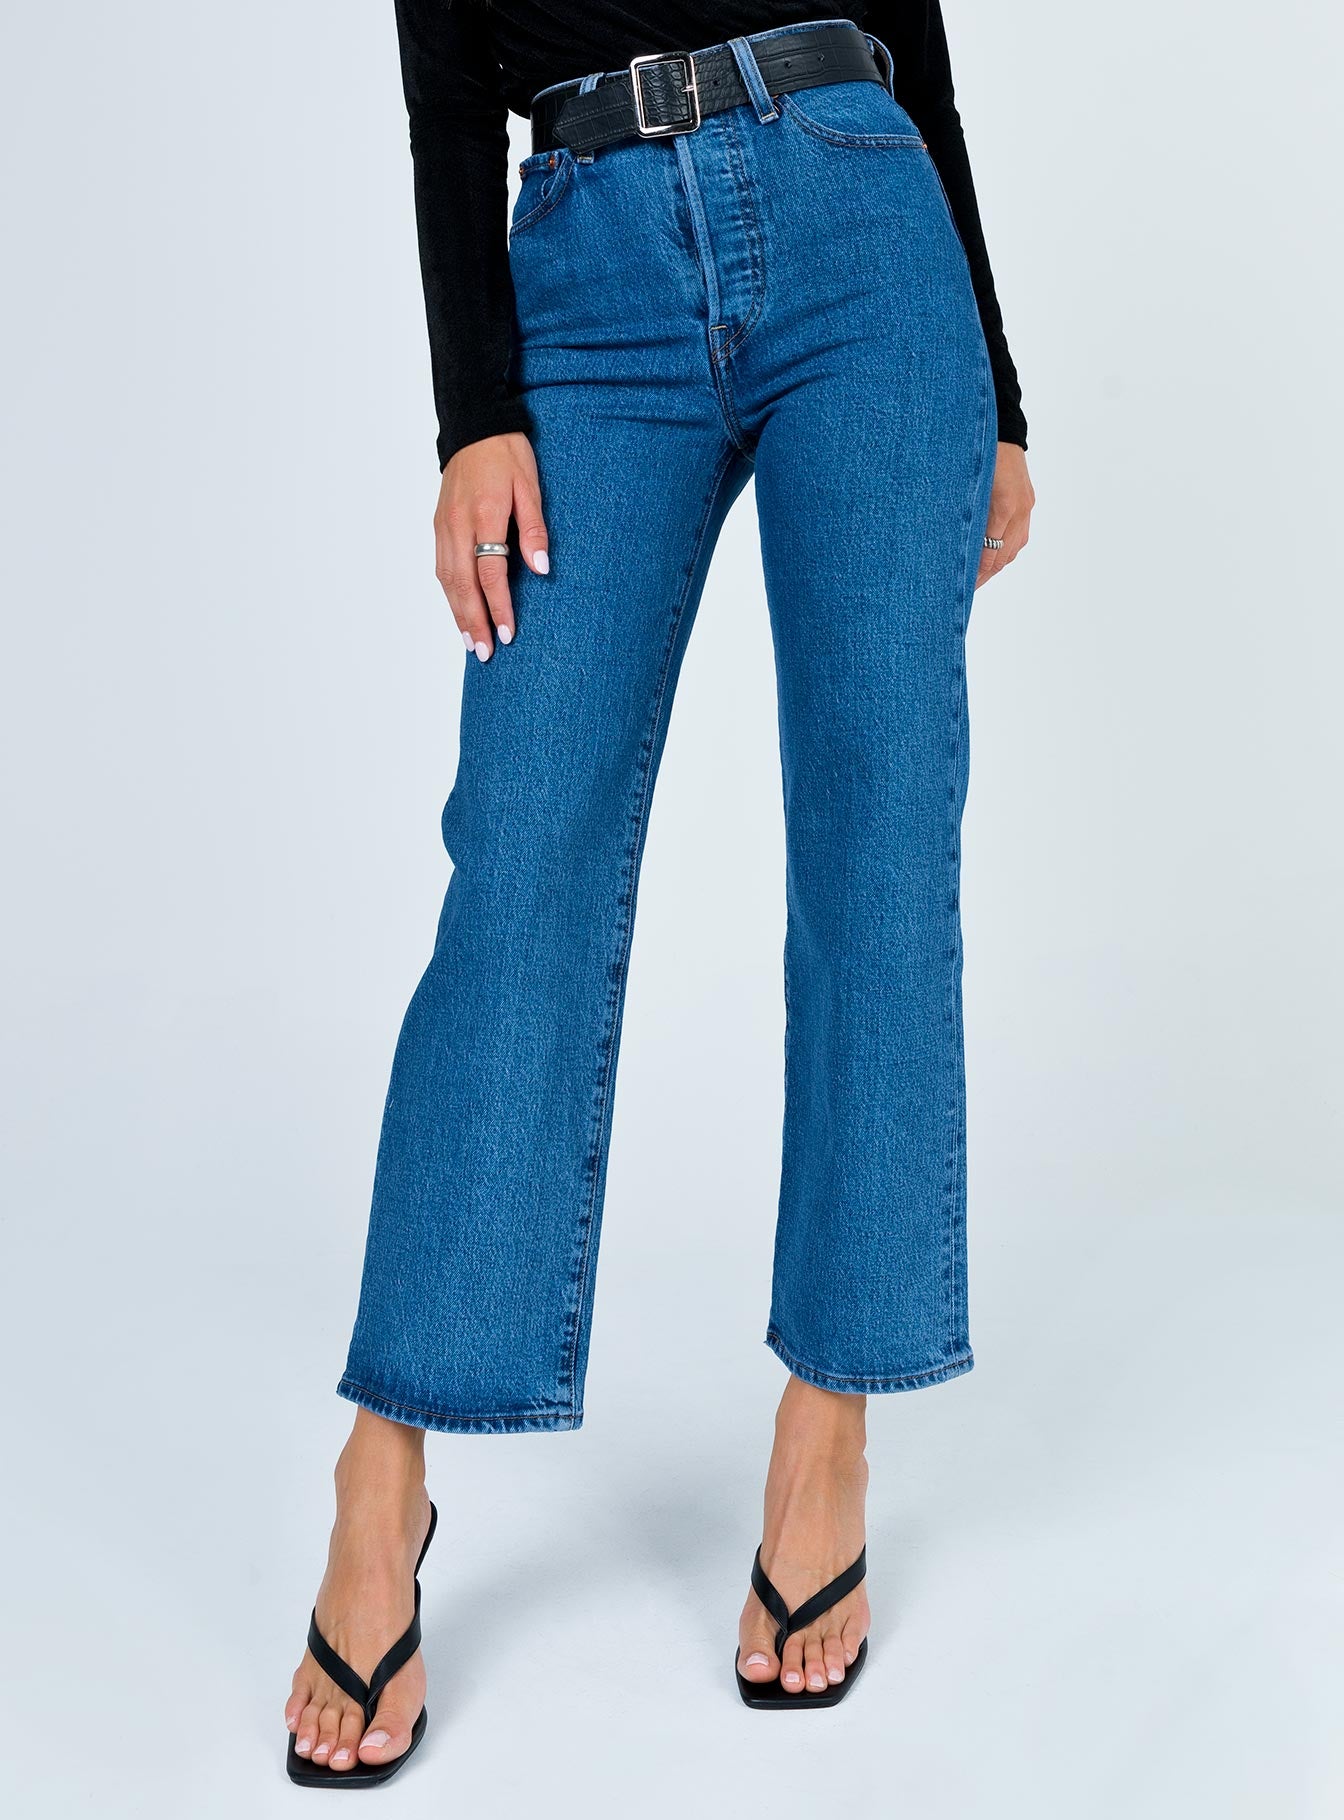 levi jeans 42 inch waist